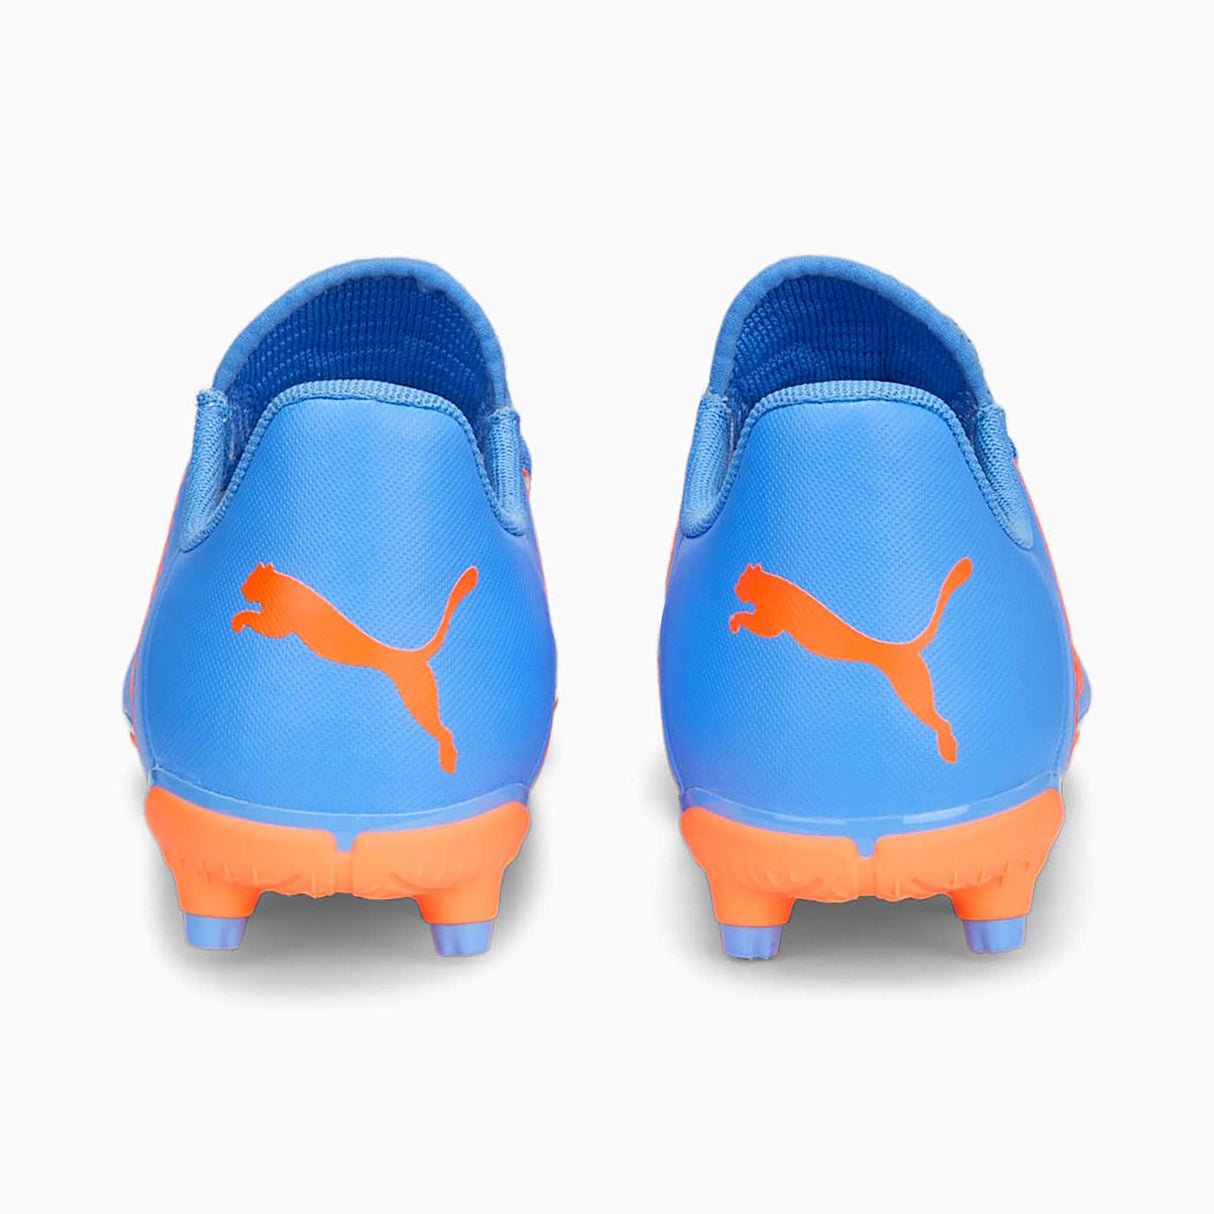 Puma Future Play FG/AG souliers soccer enfant talon- blue glimmer / white / orange